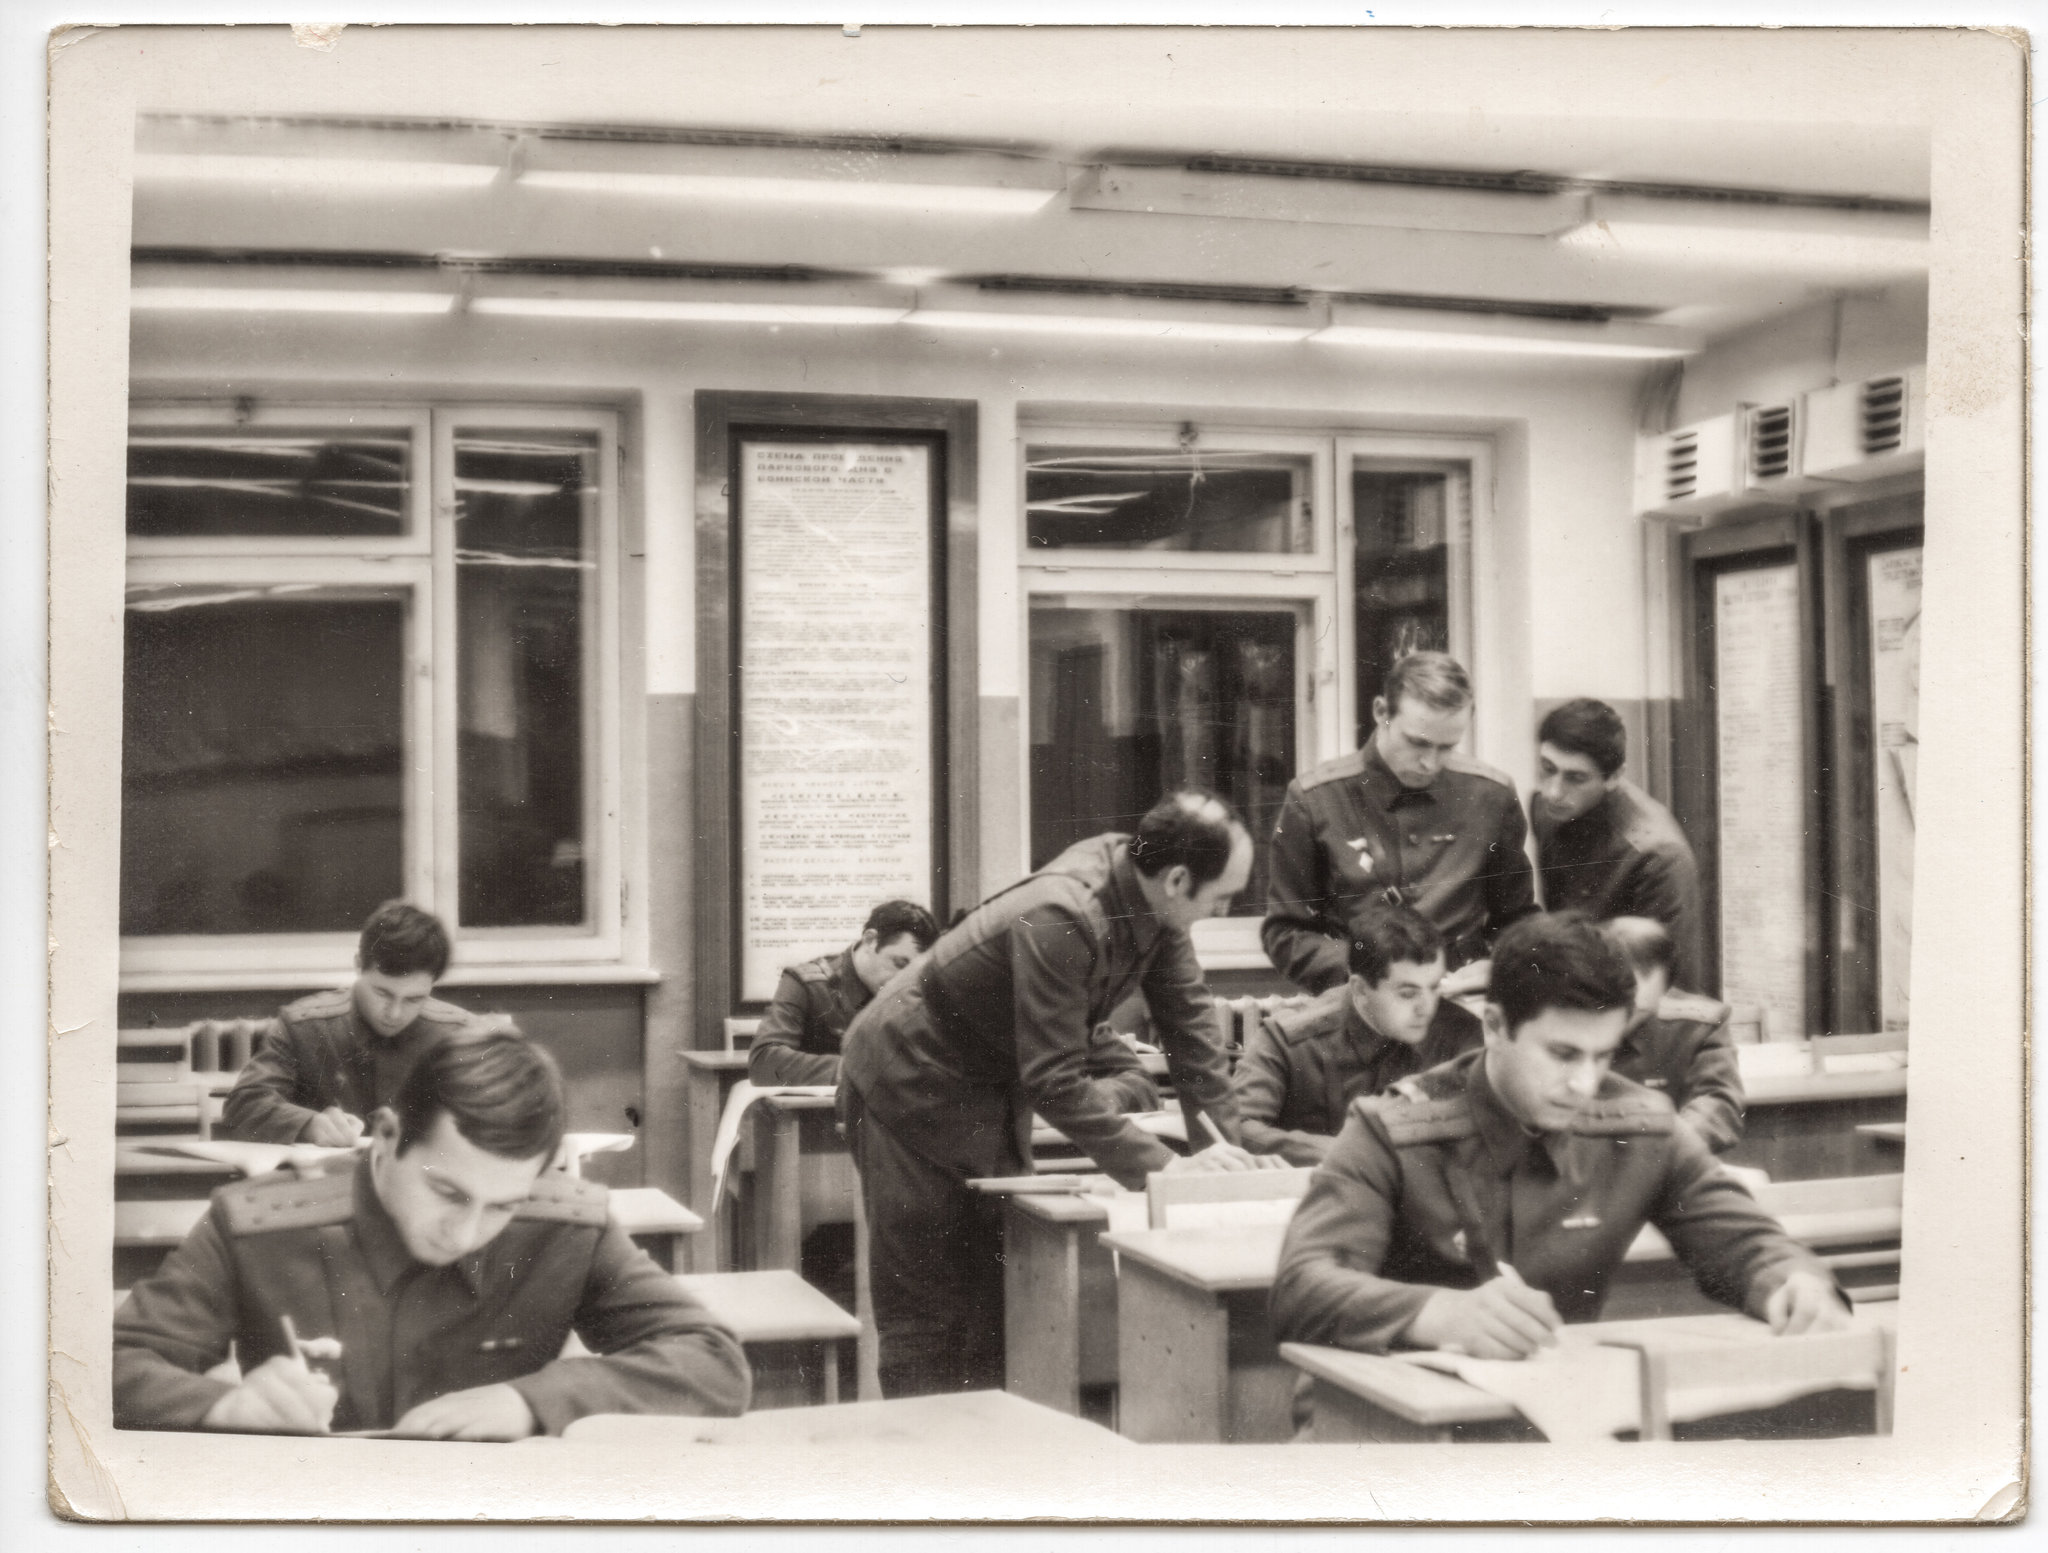 Skripal (ab. iz.), en la academia militar soviética, 1975. (Archivo familia Skripal/New York Times)